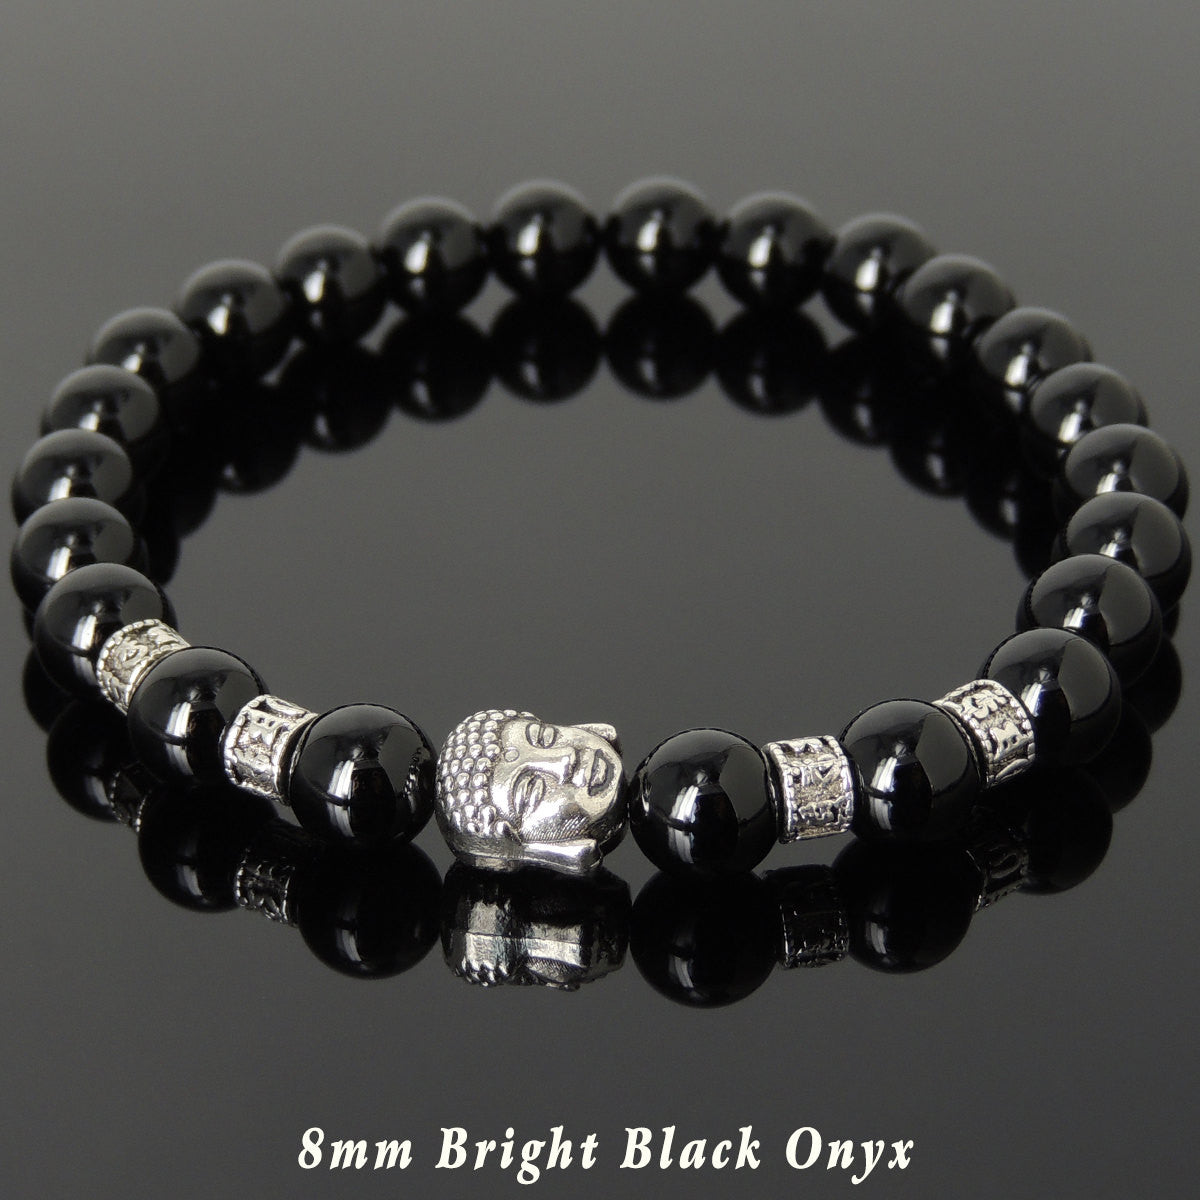 Bright Black Onyx Healing Gemstone Bracelet with Tibetan Silver Guanyin Buddha & OM Meditation Spacer Beads - Handmade by Gem & Silver TSB308